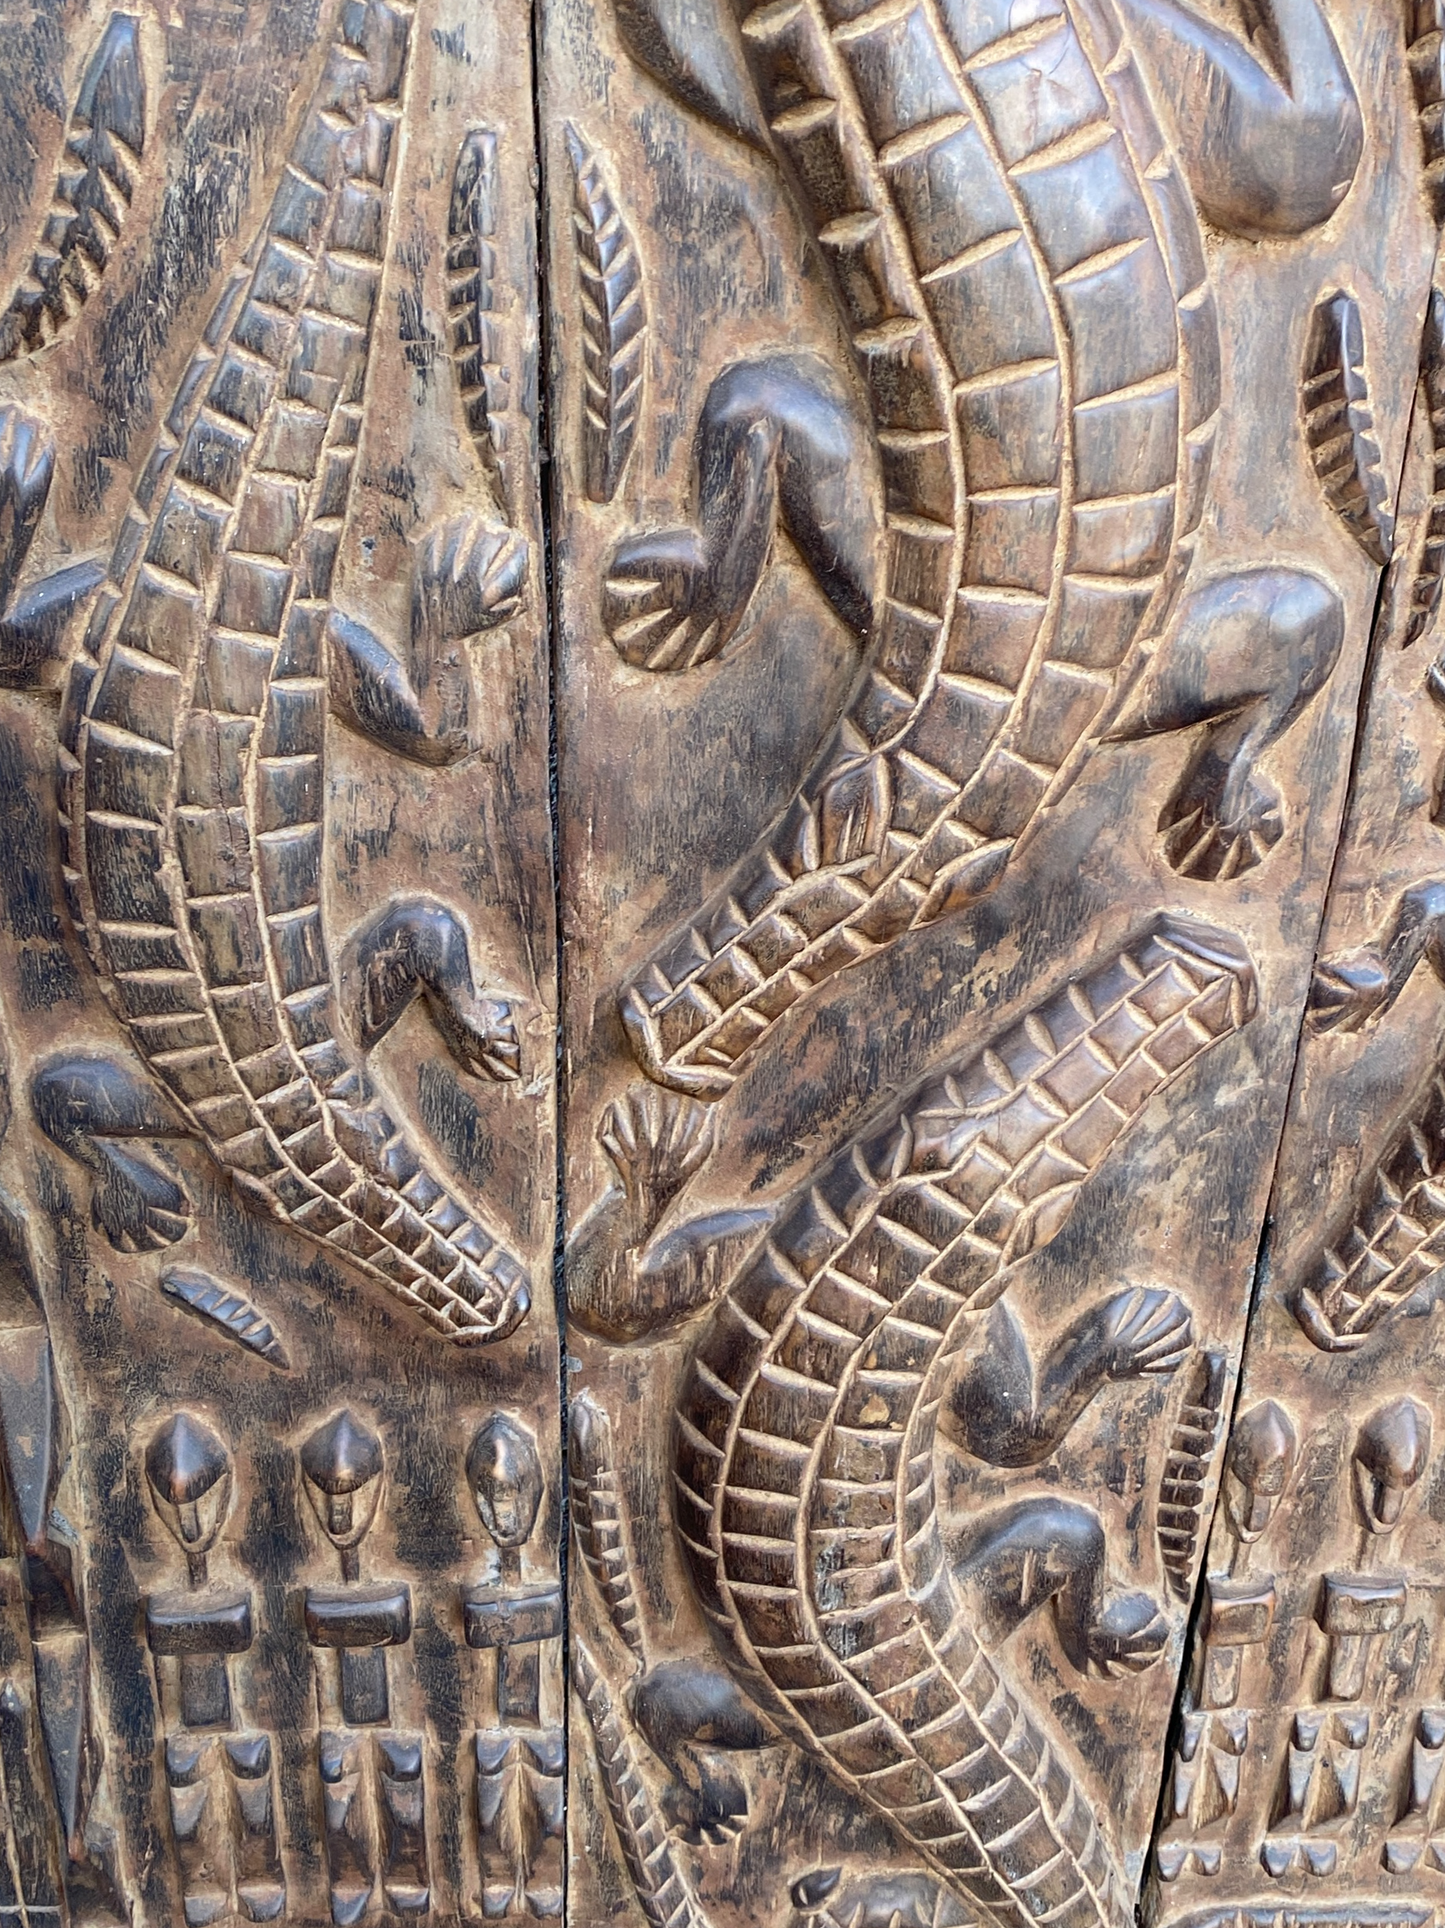 # 5109 Dogon Multiple Crocodiles Door With Figures Mali African 74" H